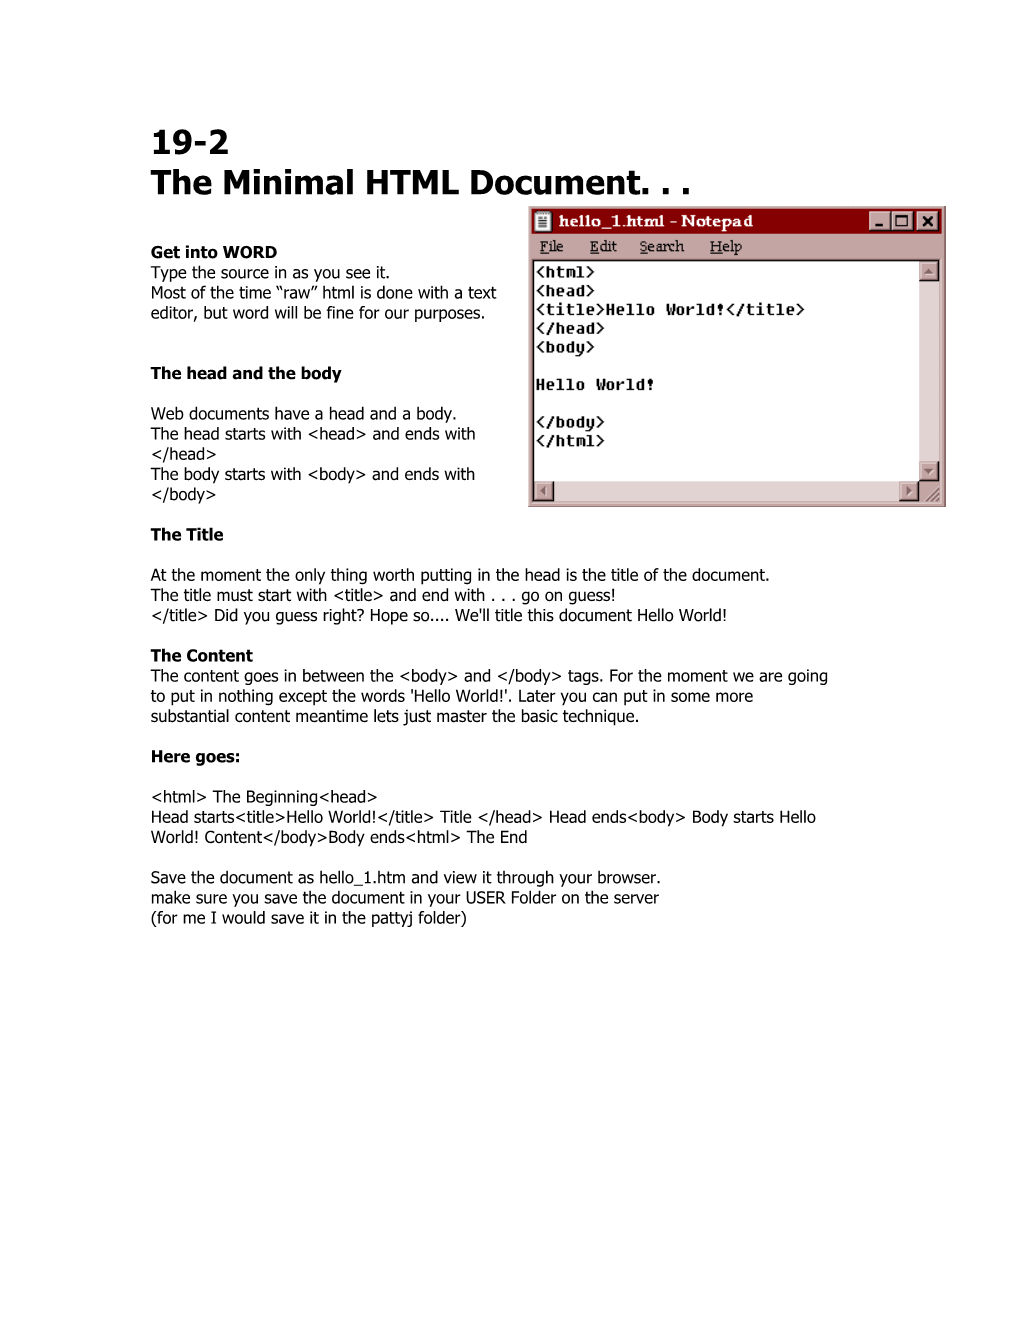 The Minimal HTML Document